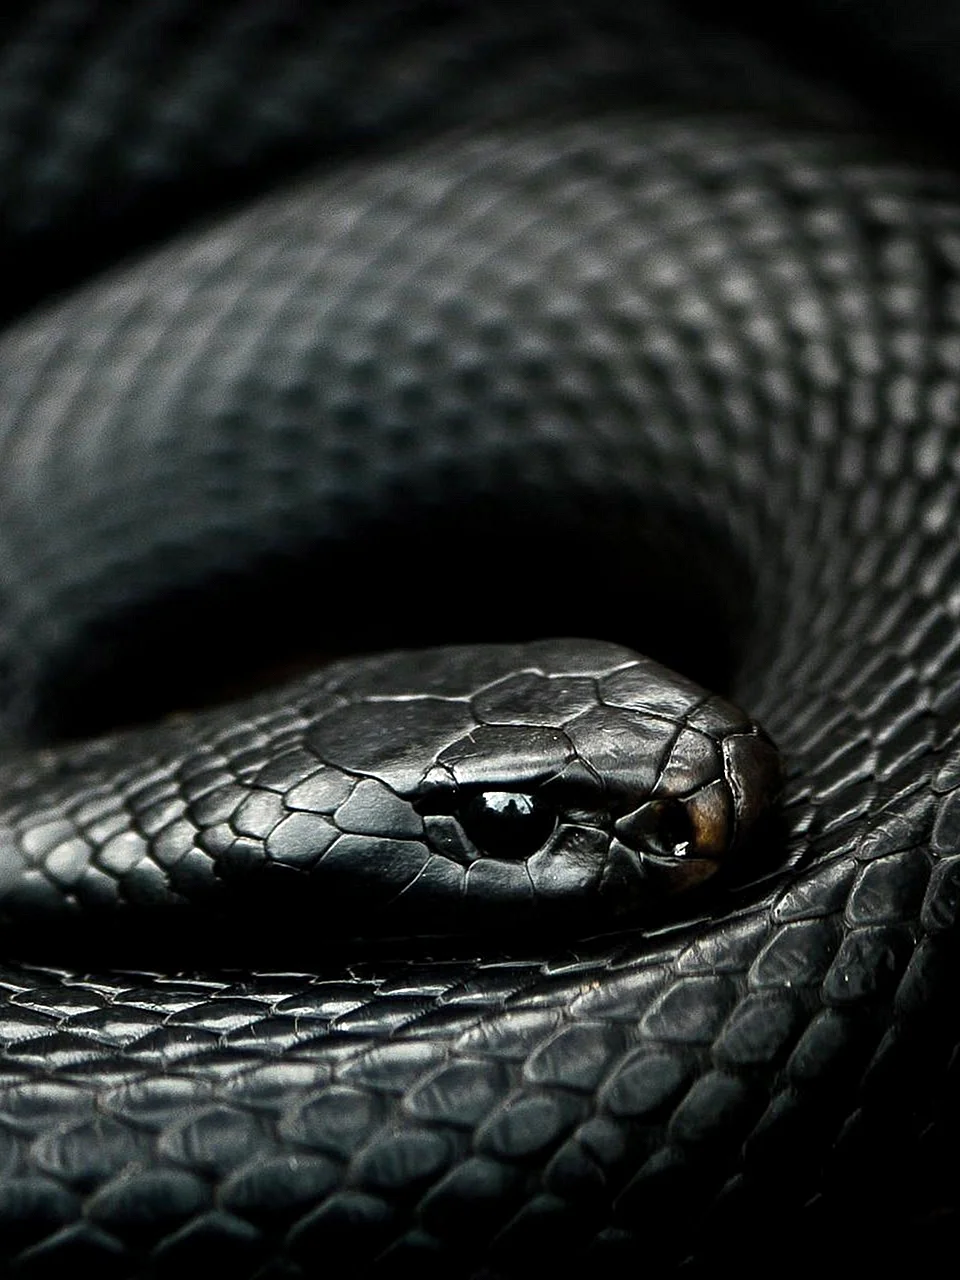 Black Mamba Snake Wallpaper For iPhone